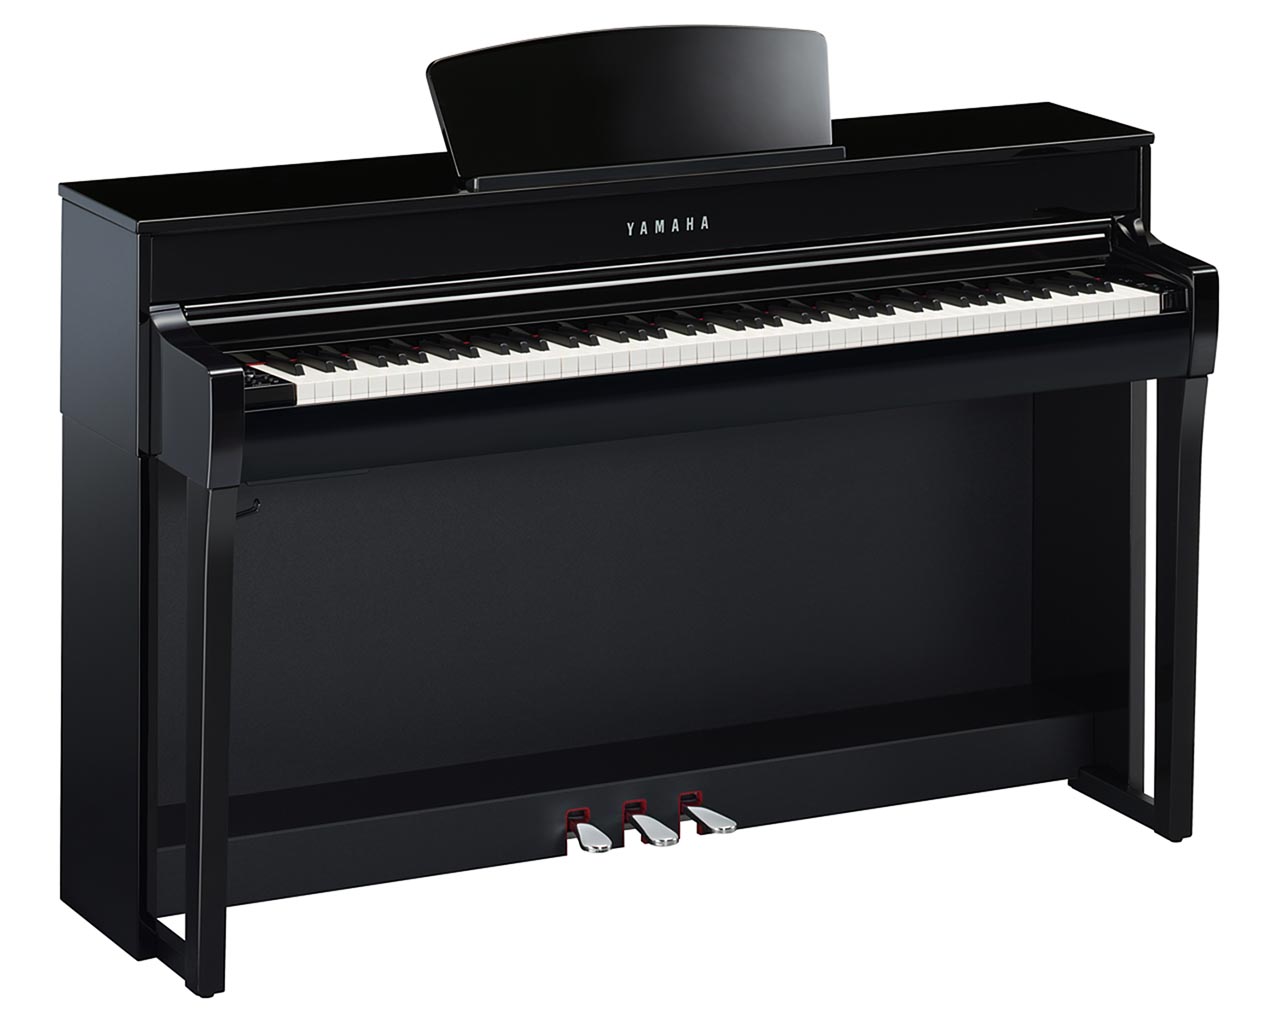 Yamaha-Clavinova-CLP-735-PE-Digitalpiano-schwarz-poliert-Pianohaus-Filipski